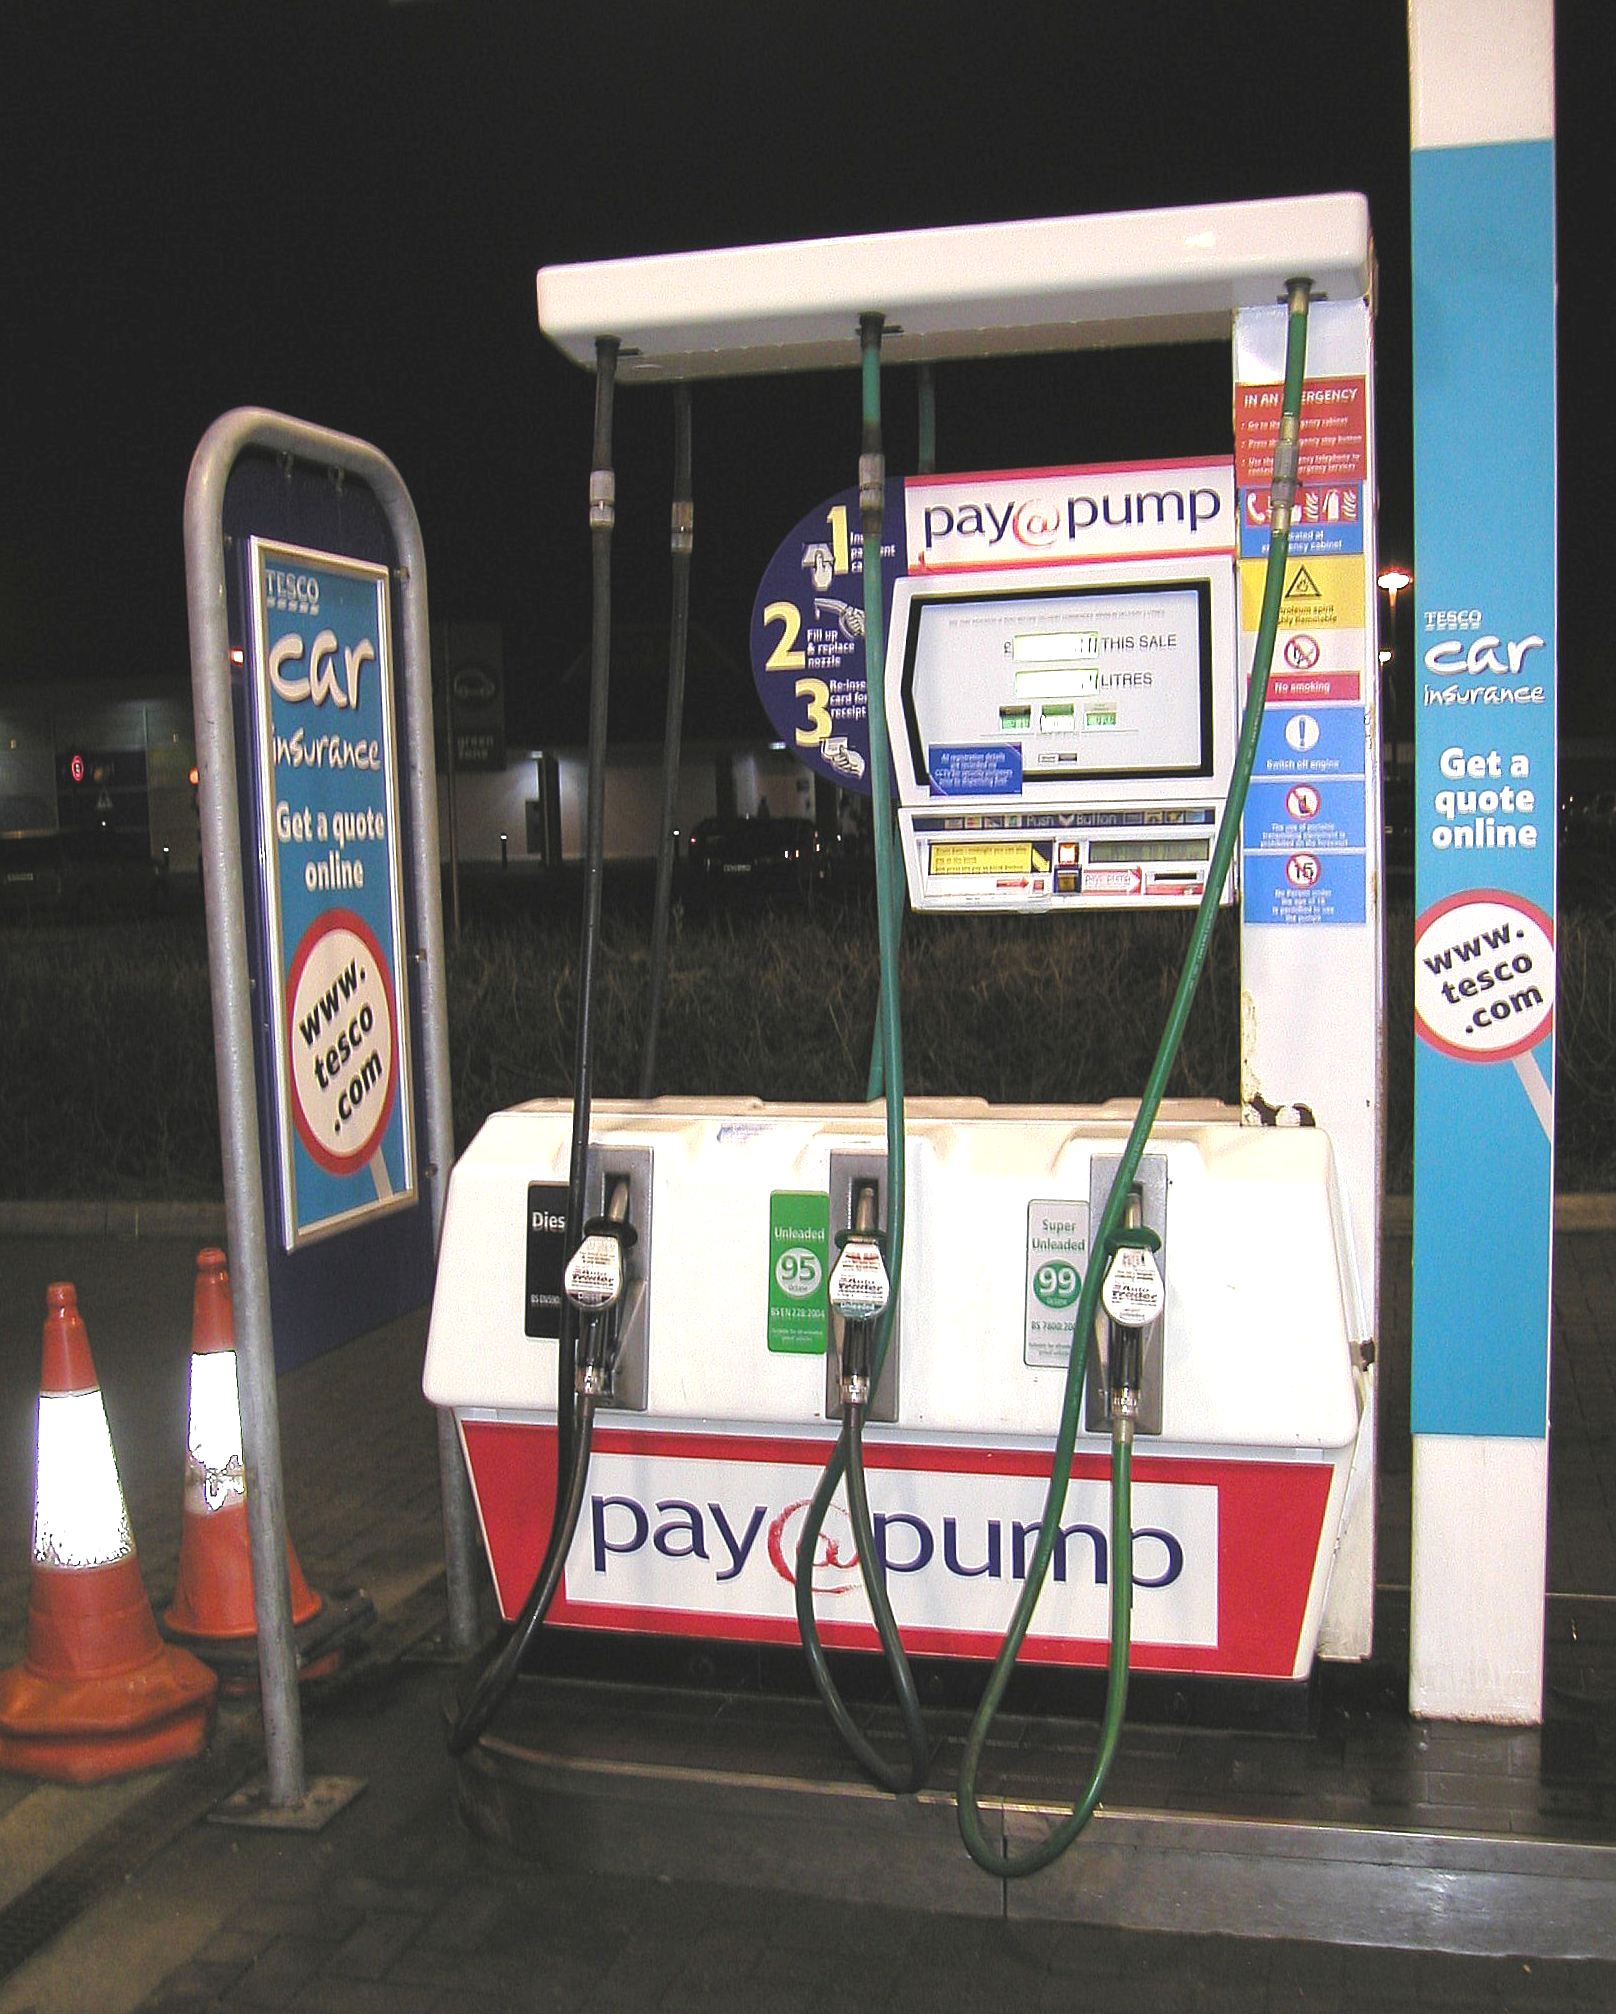 United Kingdom petrol contamination - Wikipedia